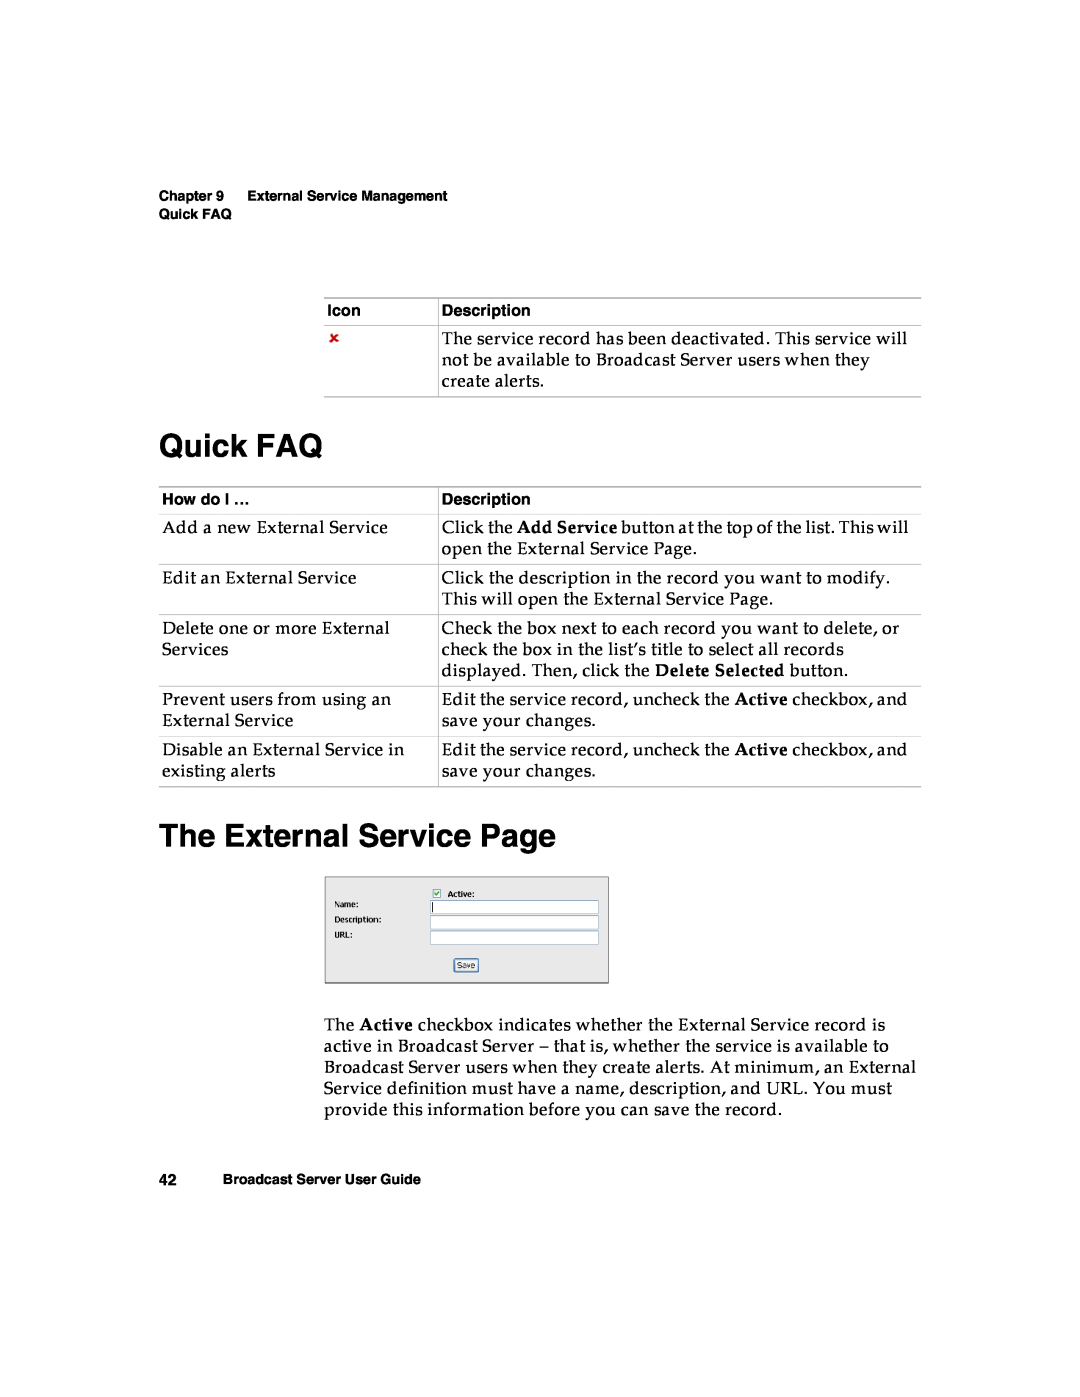 Nortel Networks Broadcast Server warranty The External Service Page, External Service Management Quick FAQ 